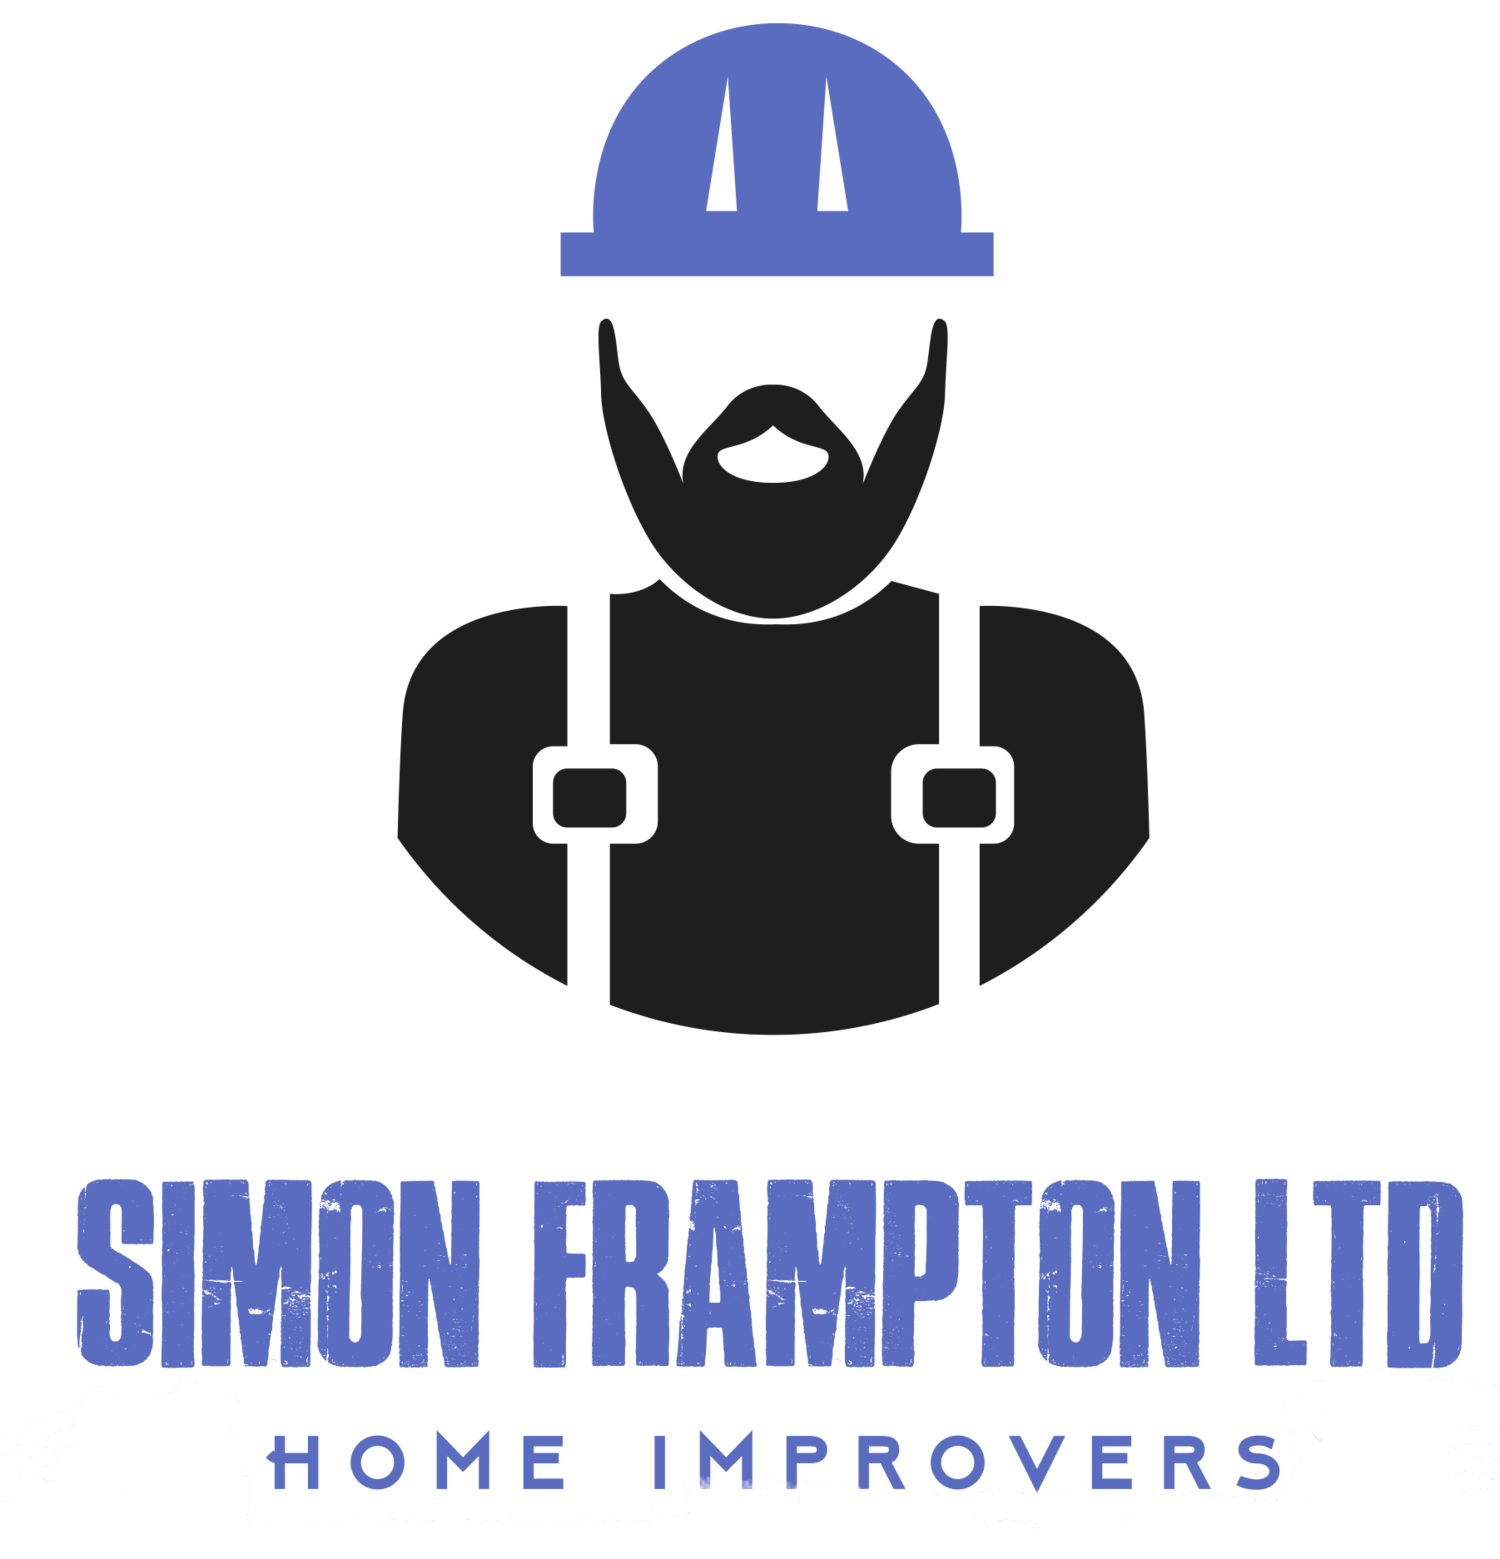 Simon Frampton Ltd